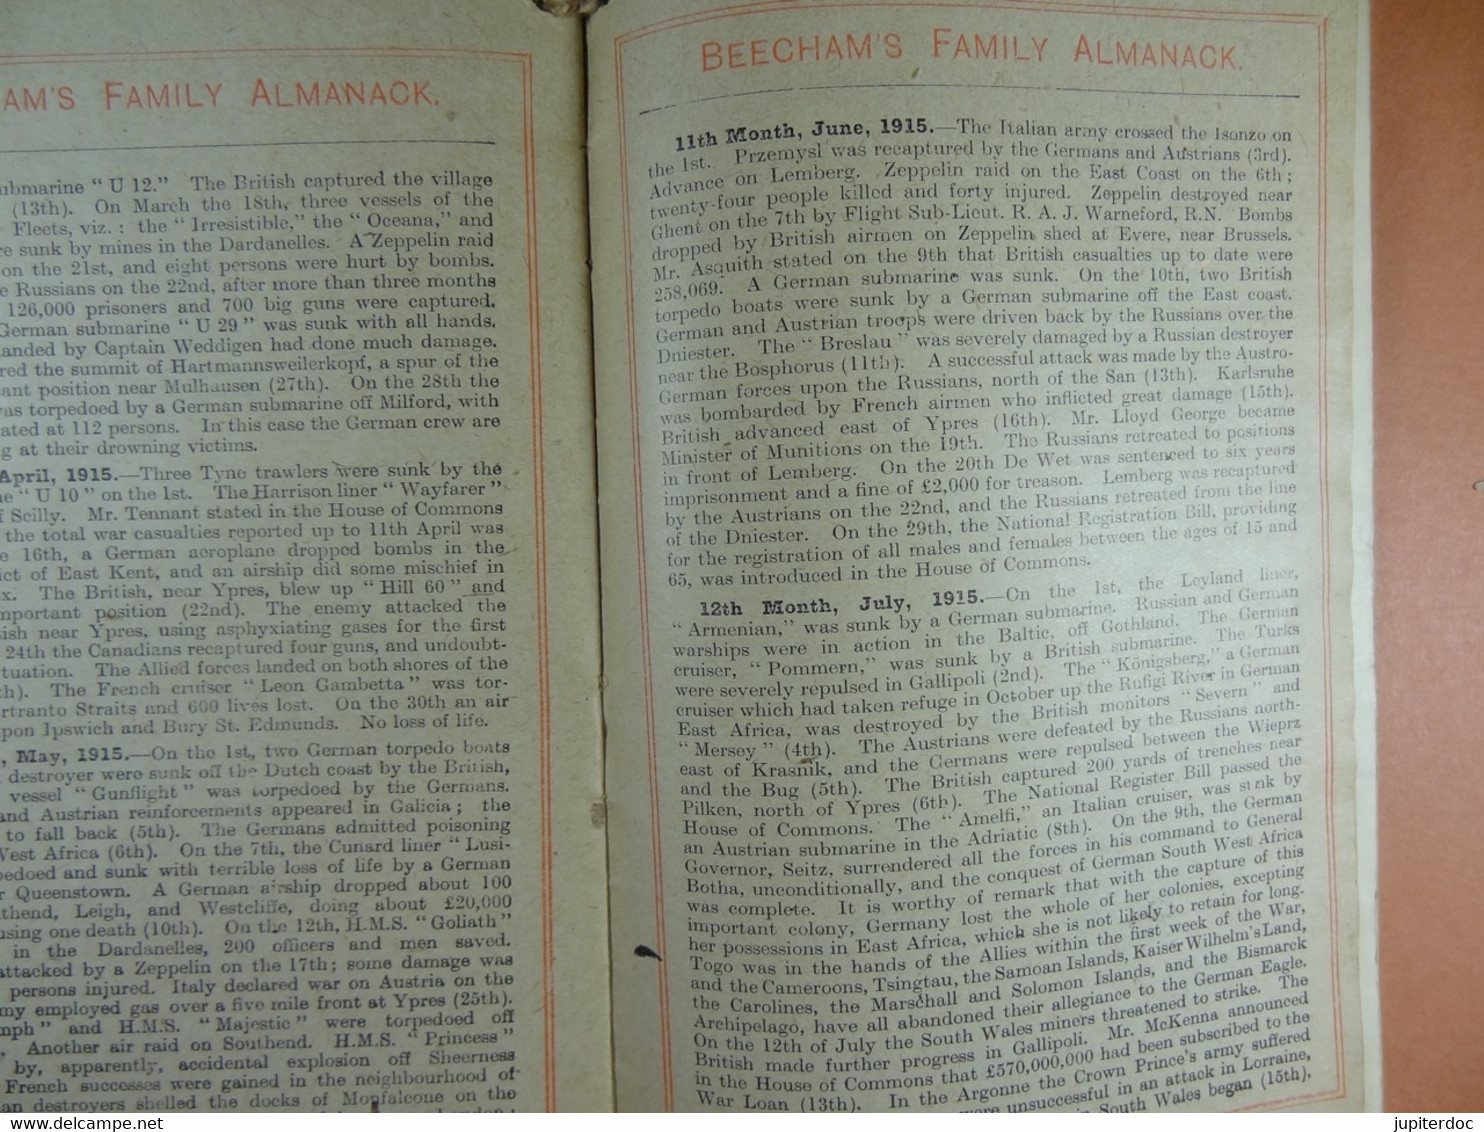 Beecham's Family Almanack 1916 (32 pages Format 12 cm x 18,5 cm)